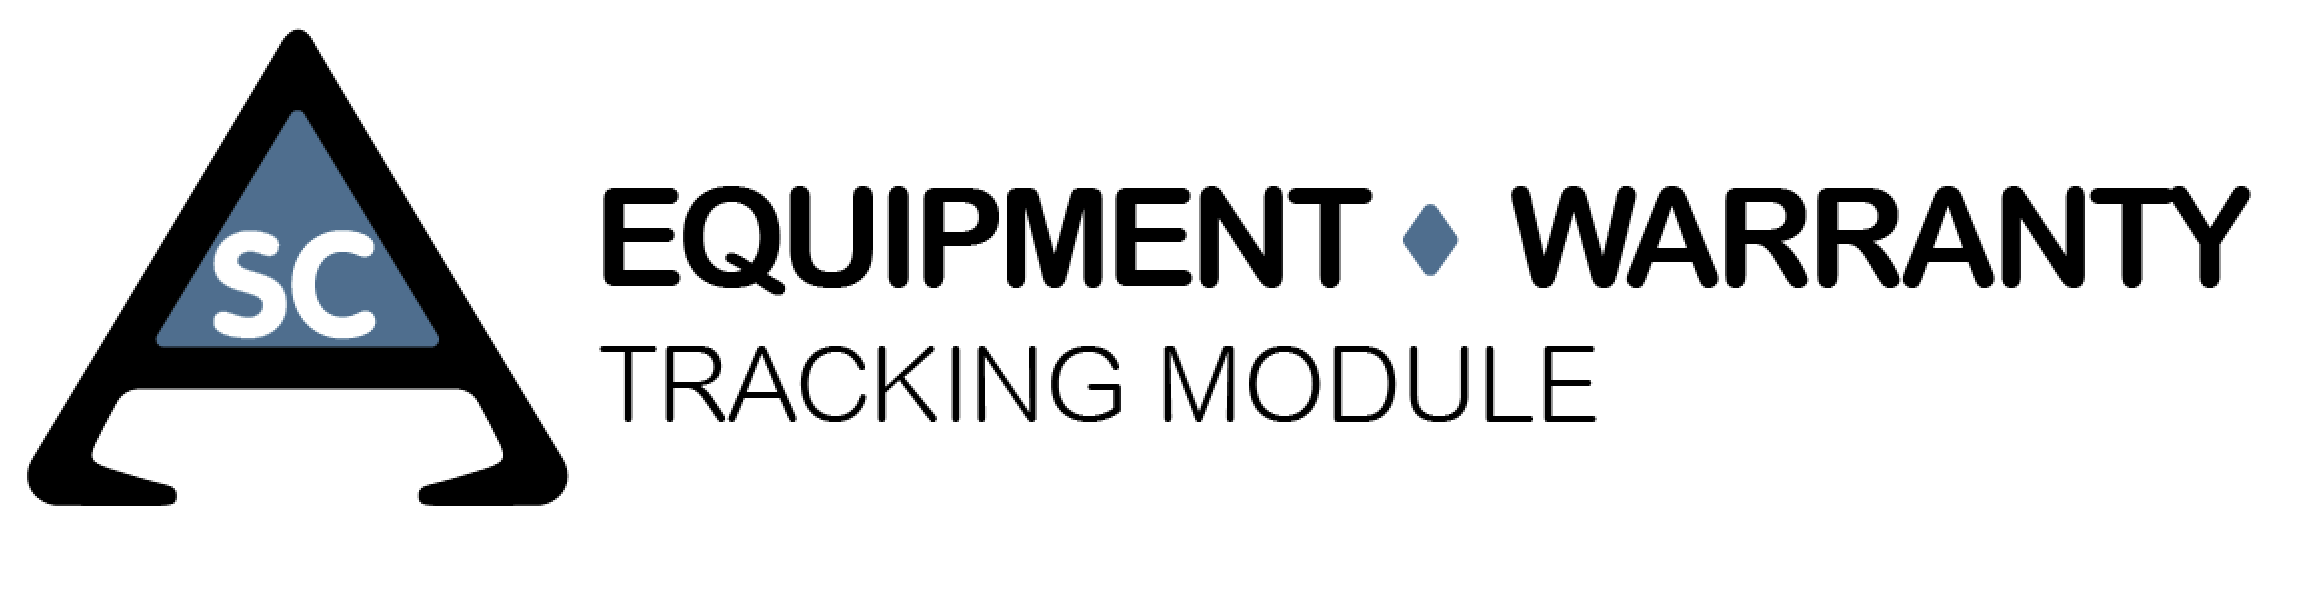 Acumatica Equipment and Warranty Tracking